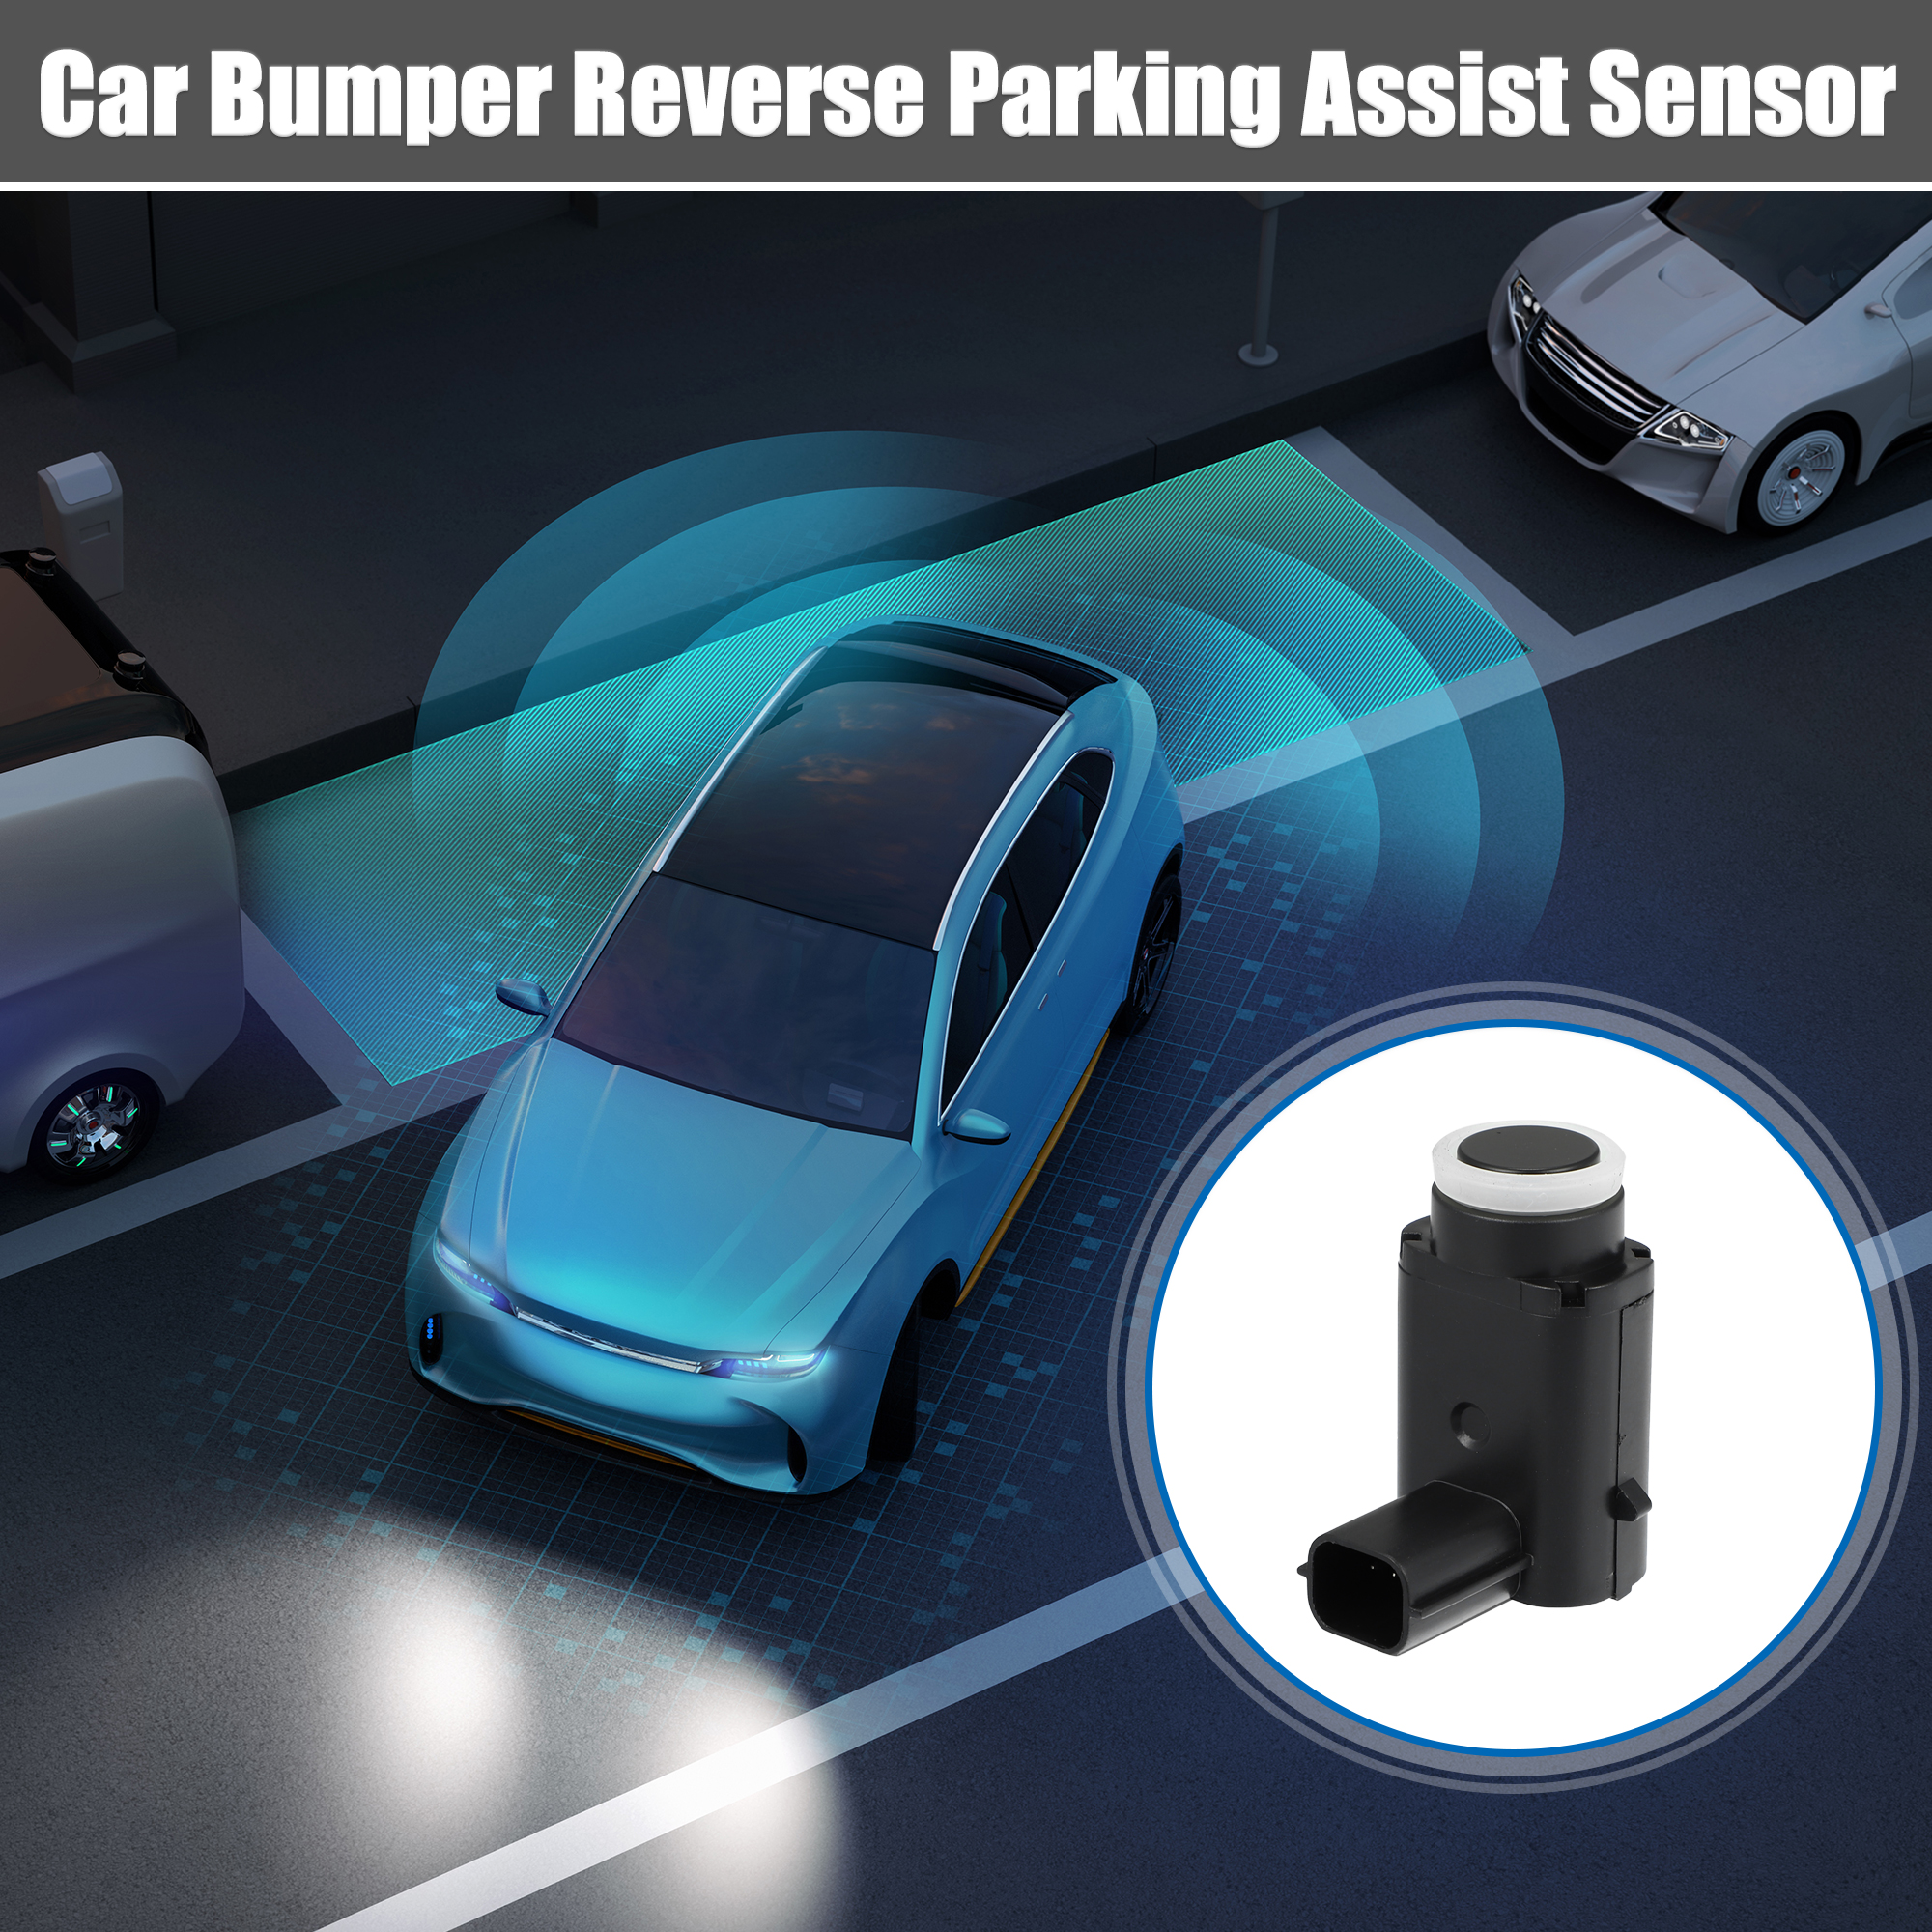 Unique Bargains Bumper Reverse Parking Assist Sensor for Cadillac ATS Base 2013-2015 25947184